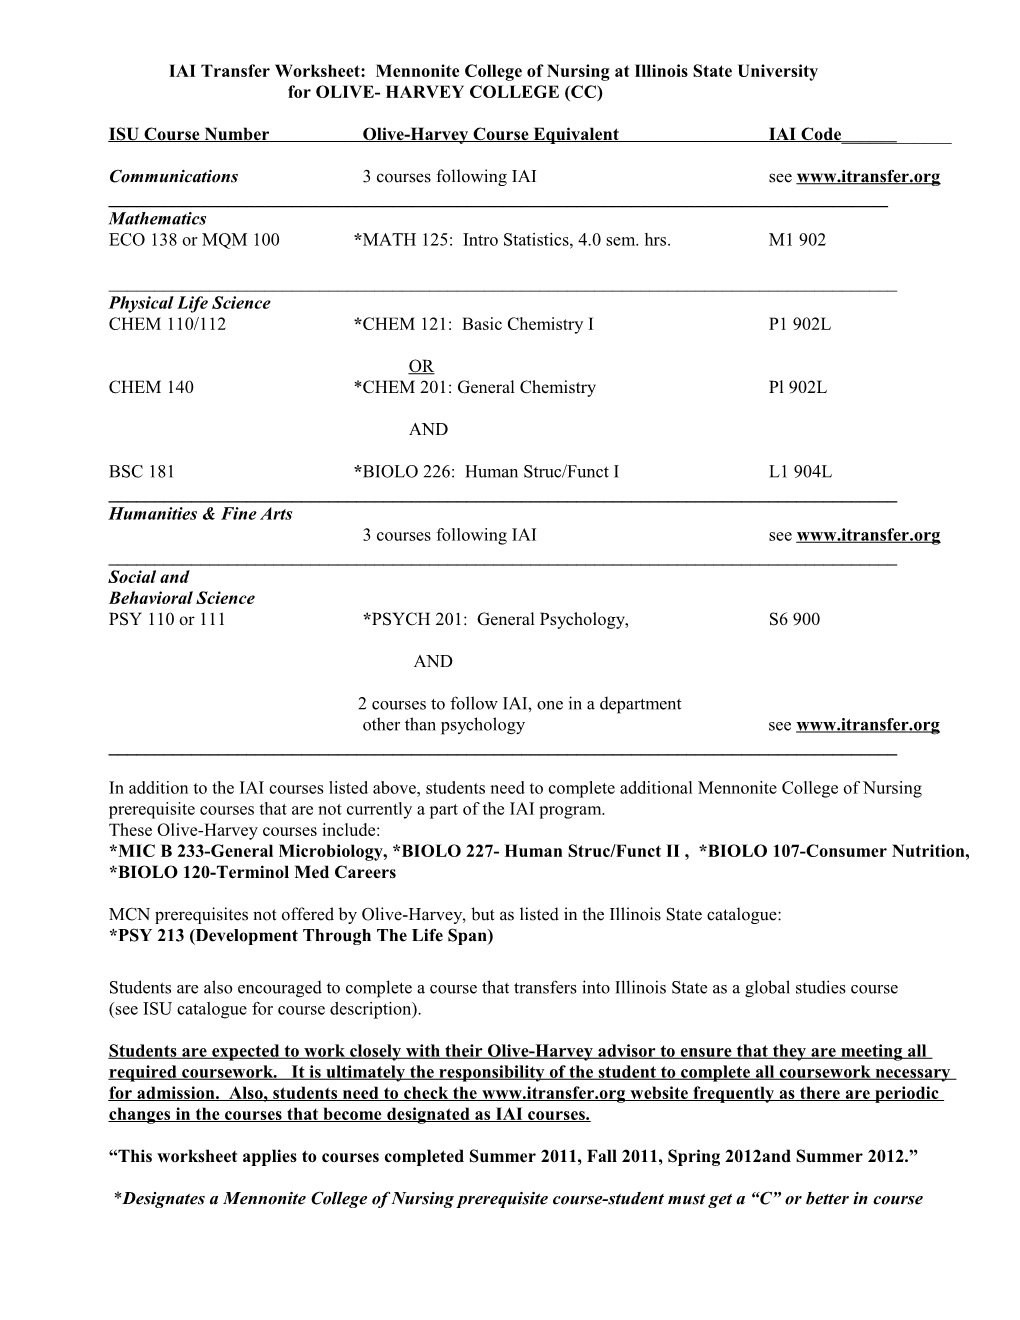 IAI Transfer Worksheet for Mennonite College of Nursing at Illinois State University